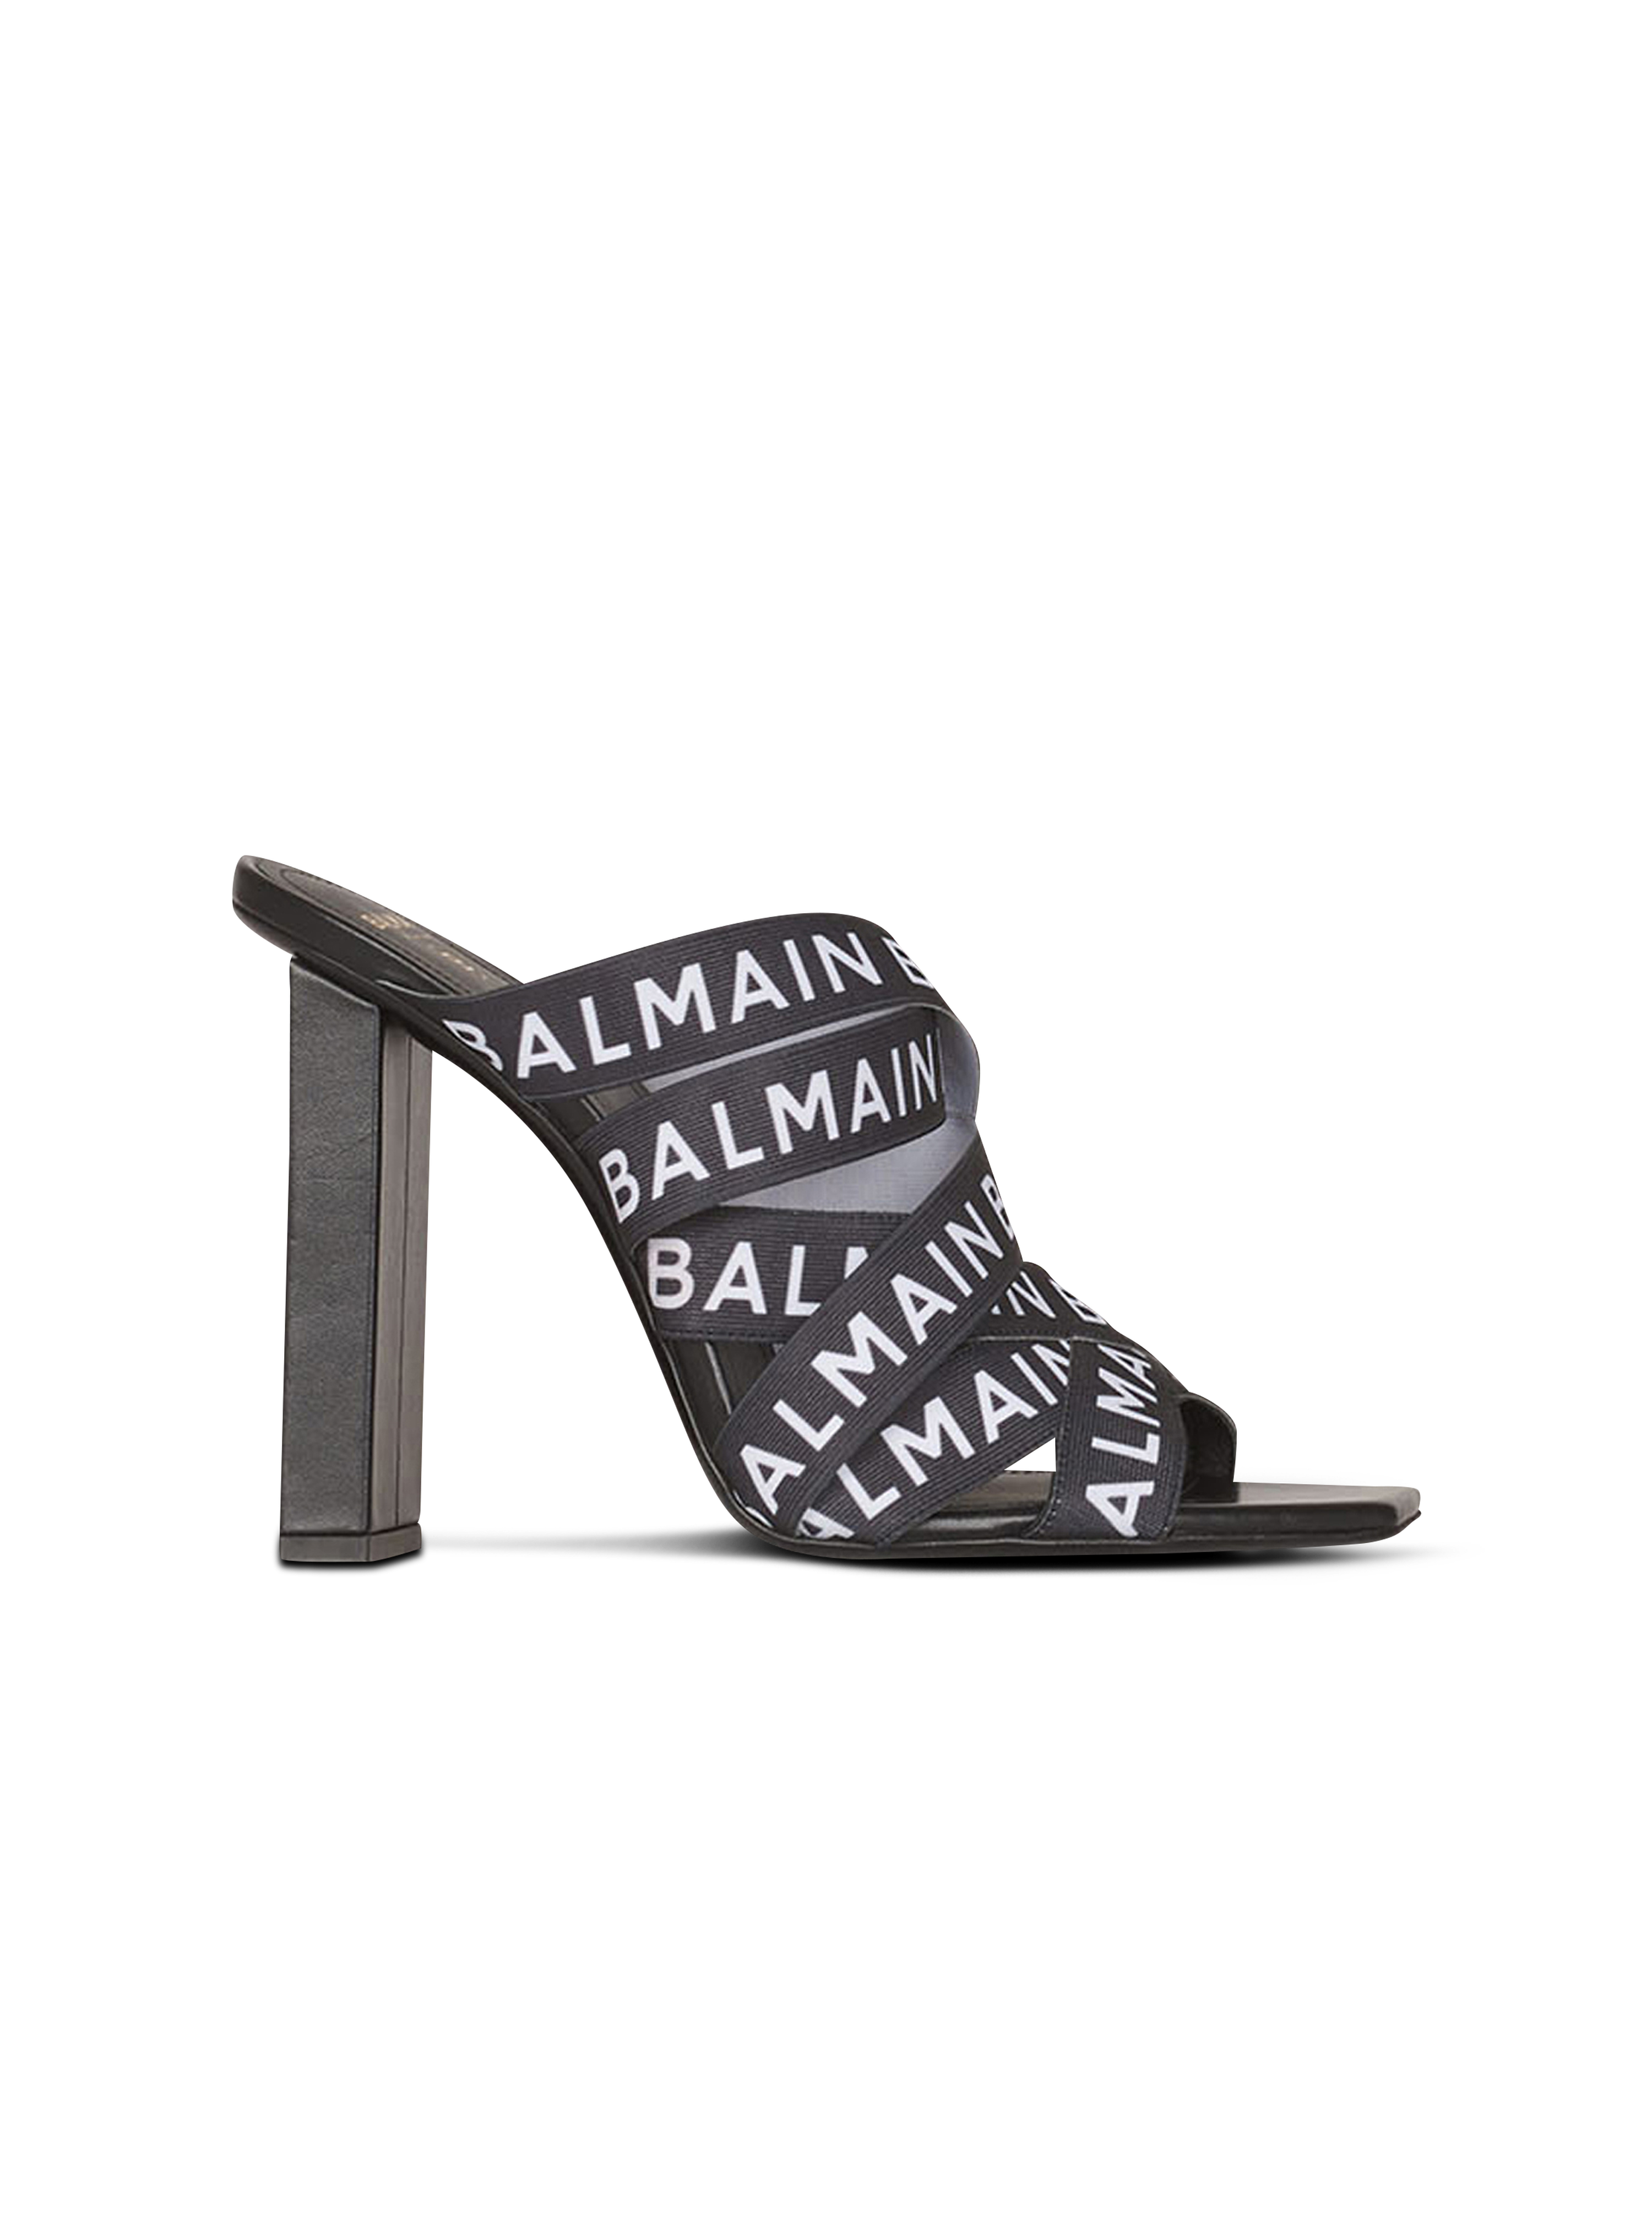 Union sandals with Balmain logo print, black